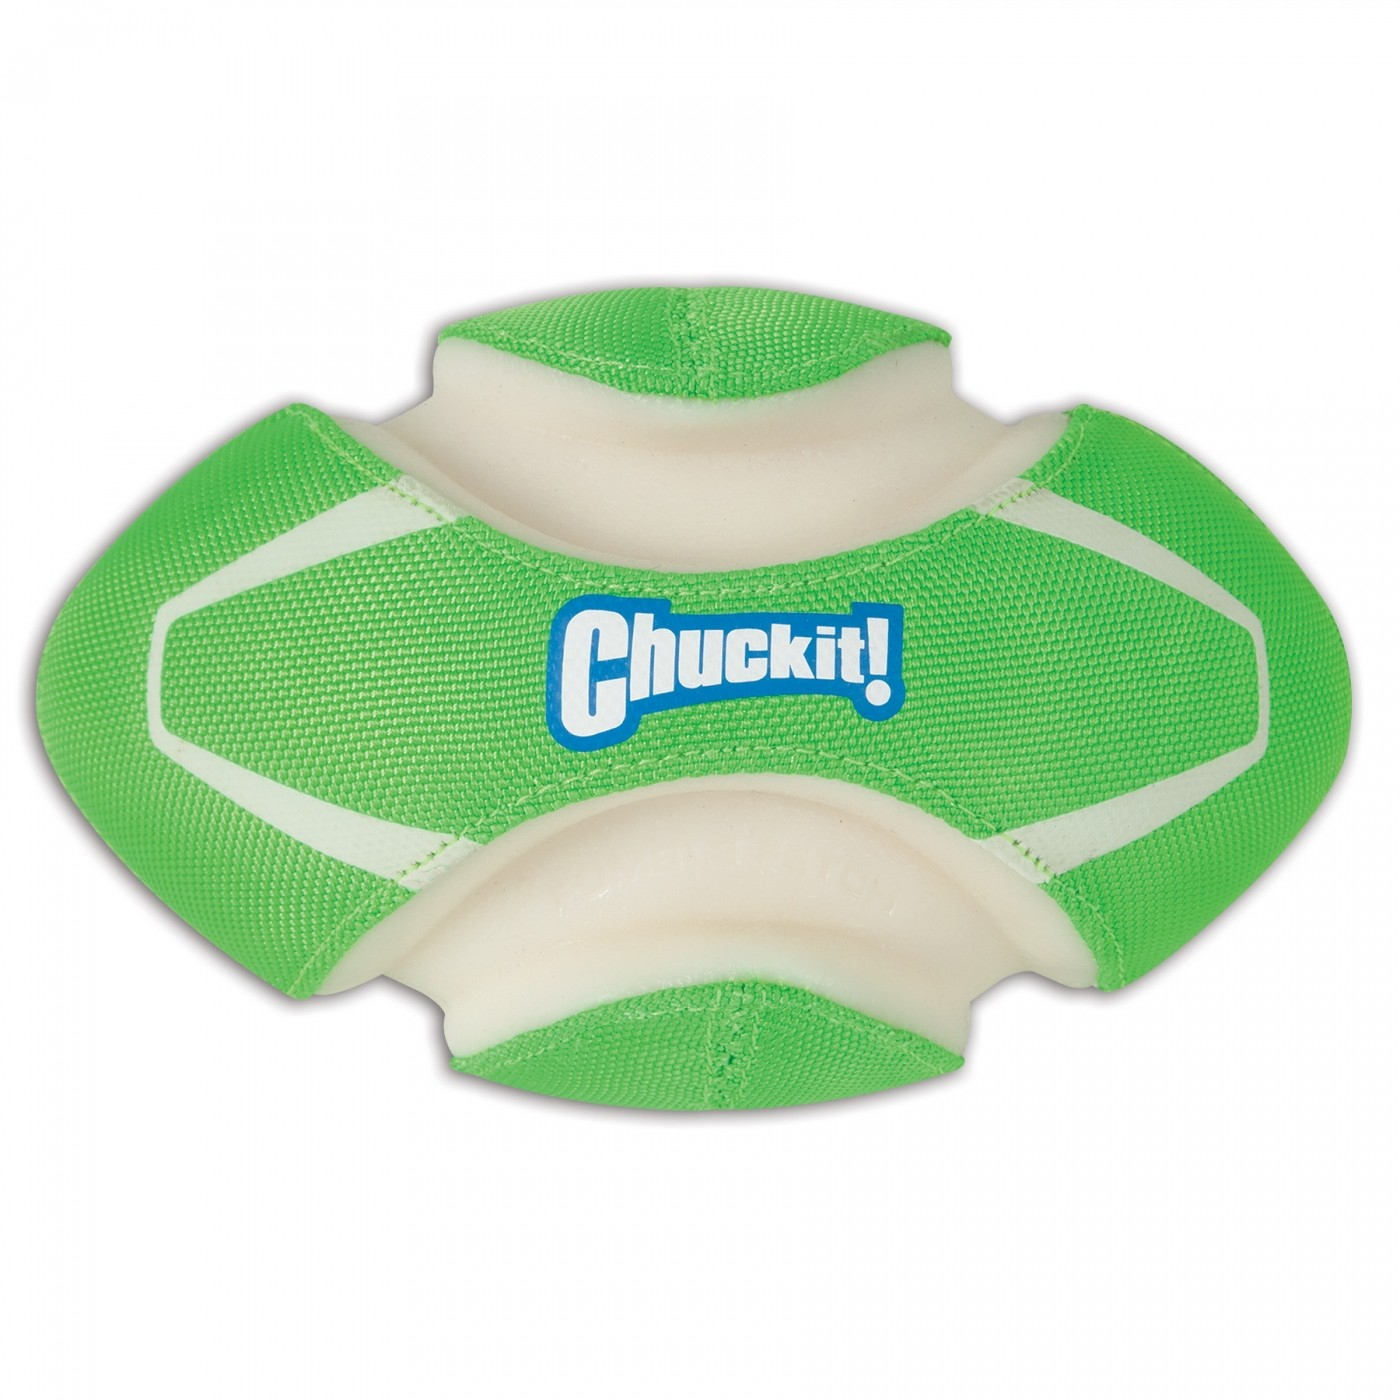 Balle pour Chien Max Glow Pro Fumble Fetch Chuckit!